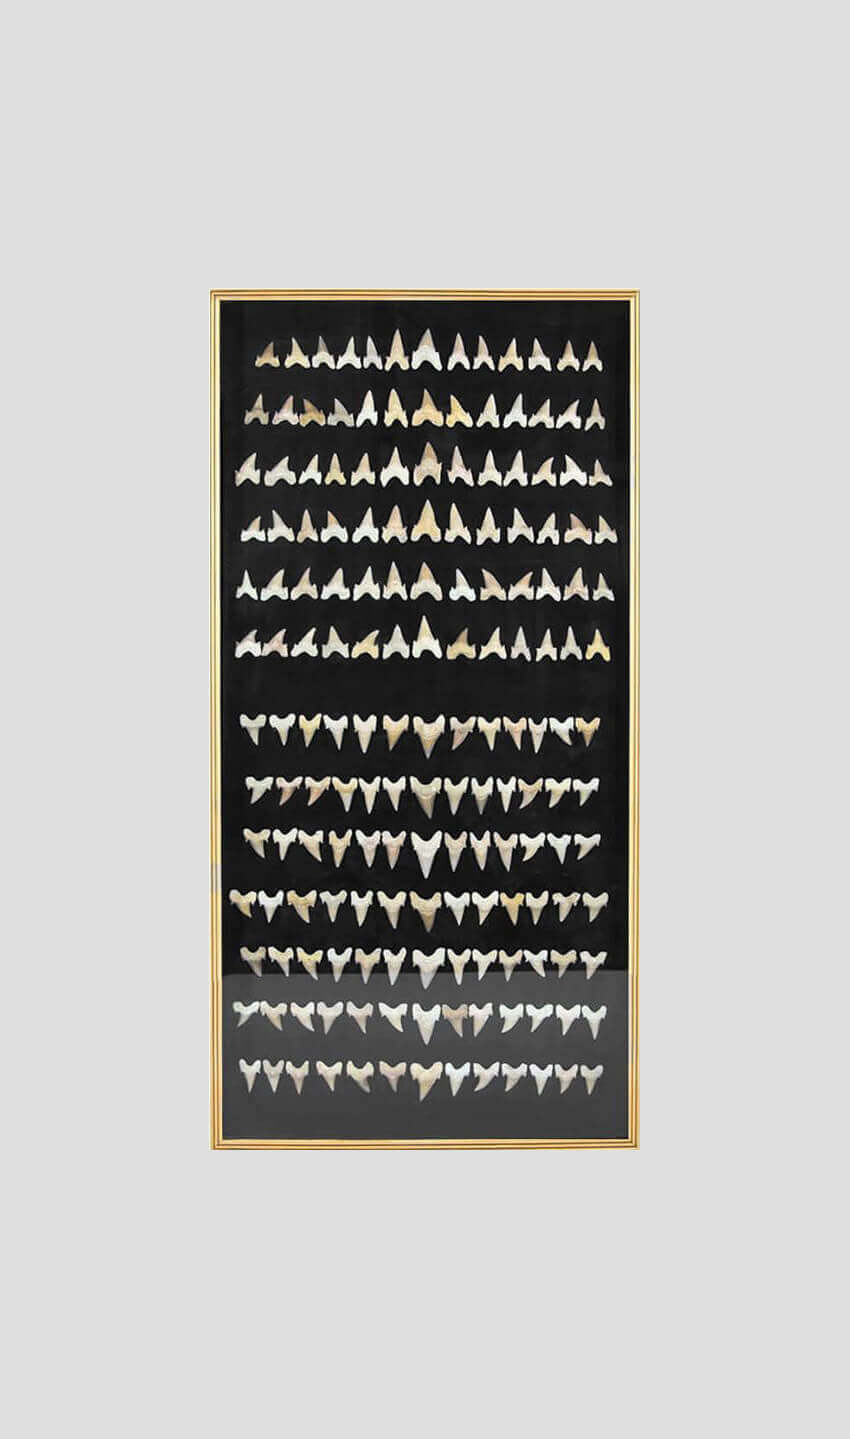 fossil otodus obliquus shark teeth frame for sale 44